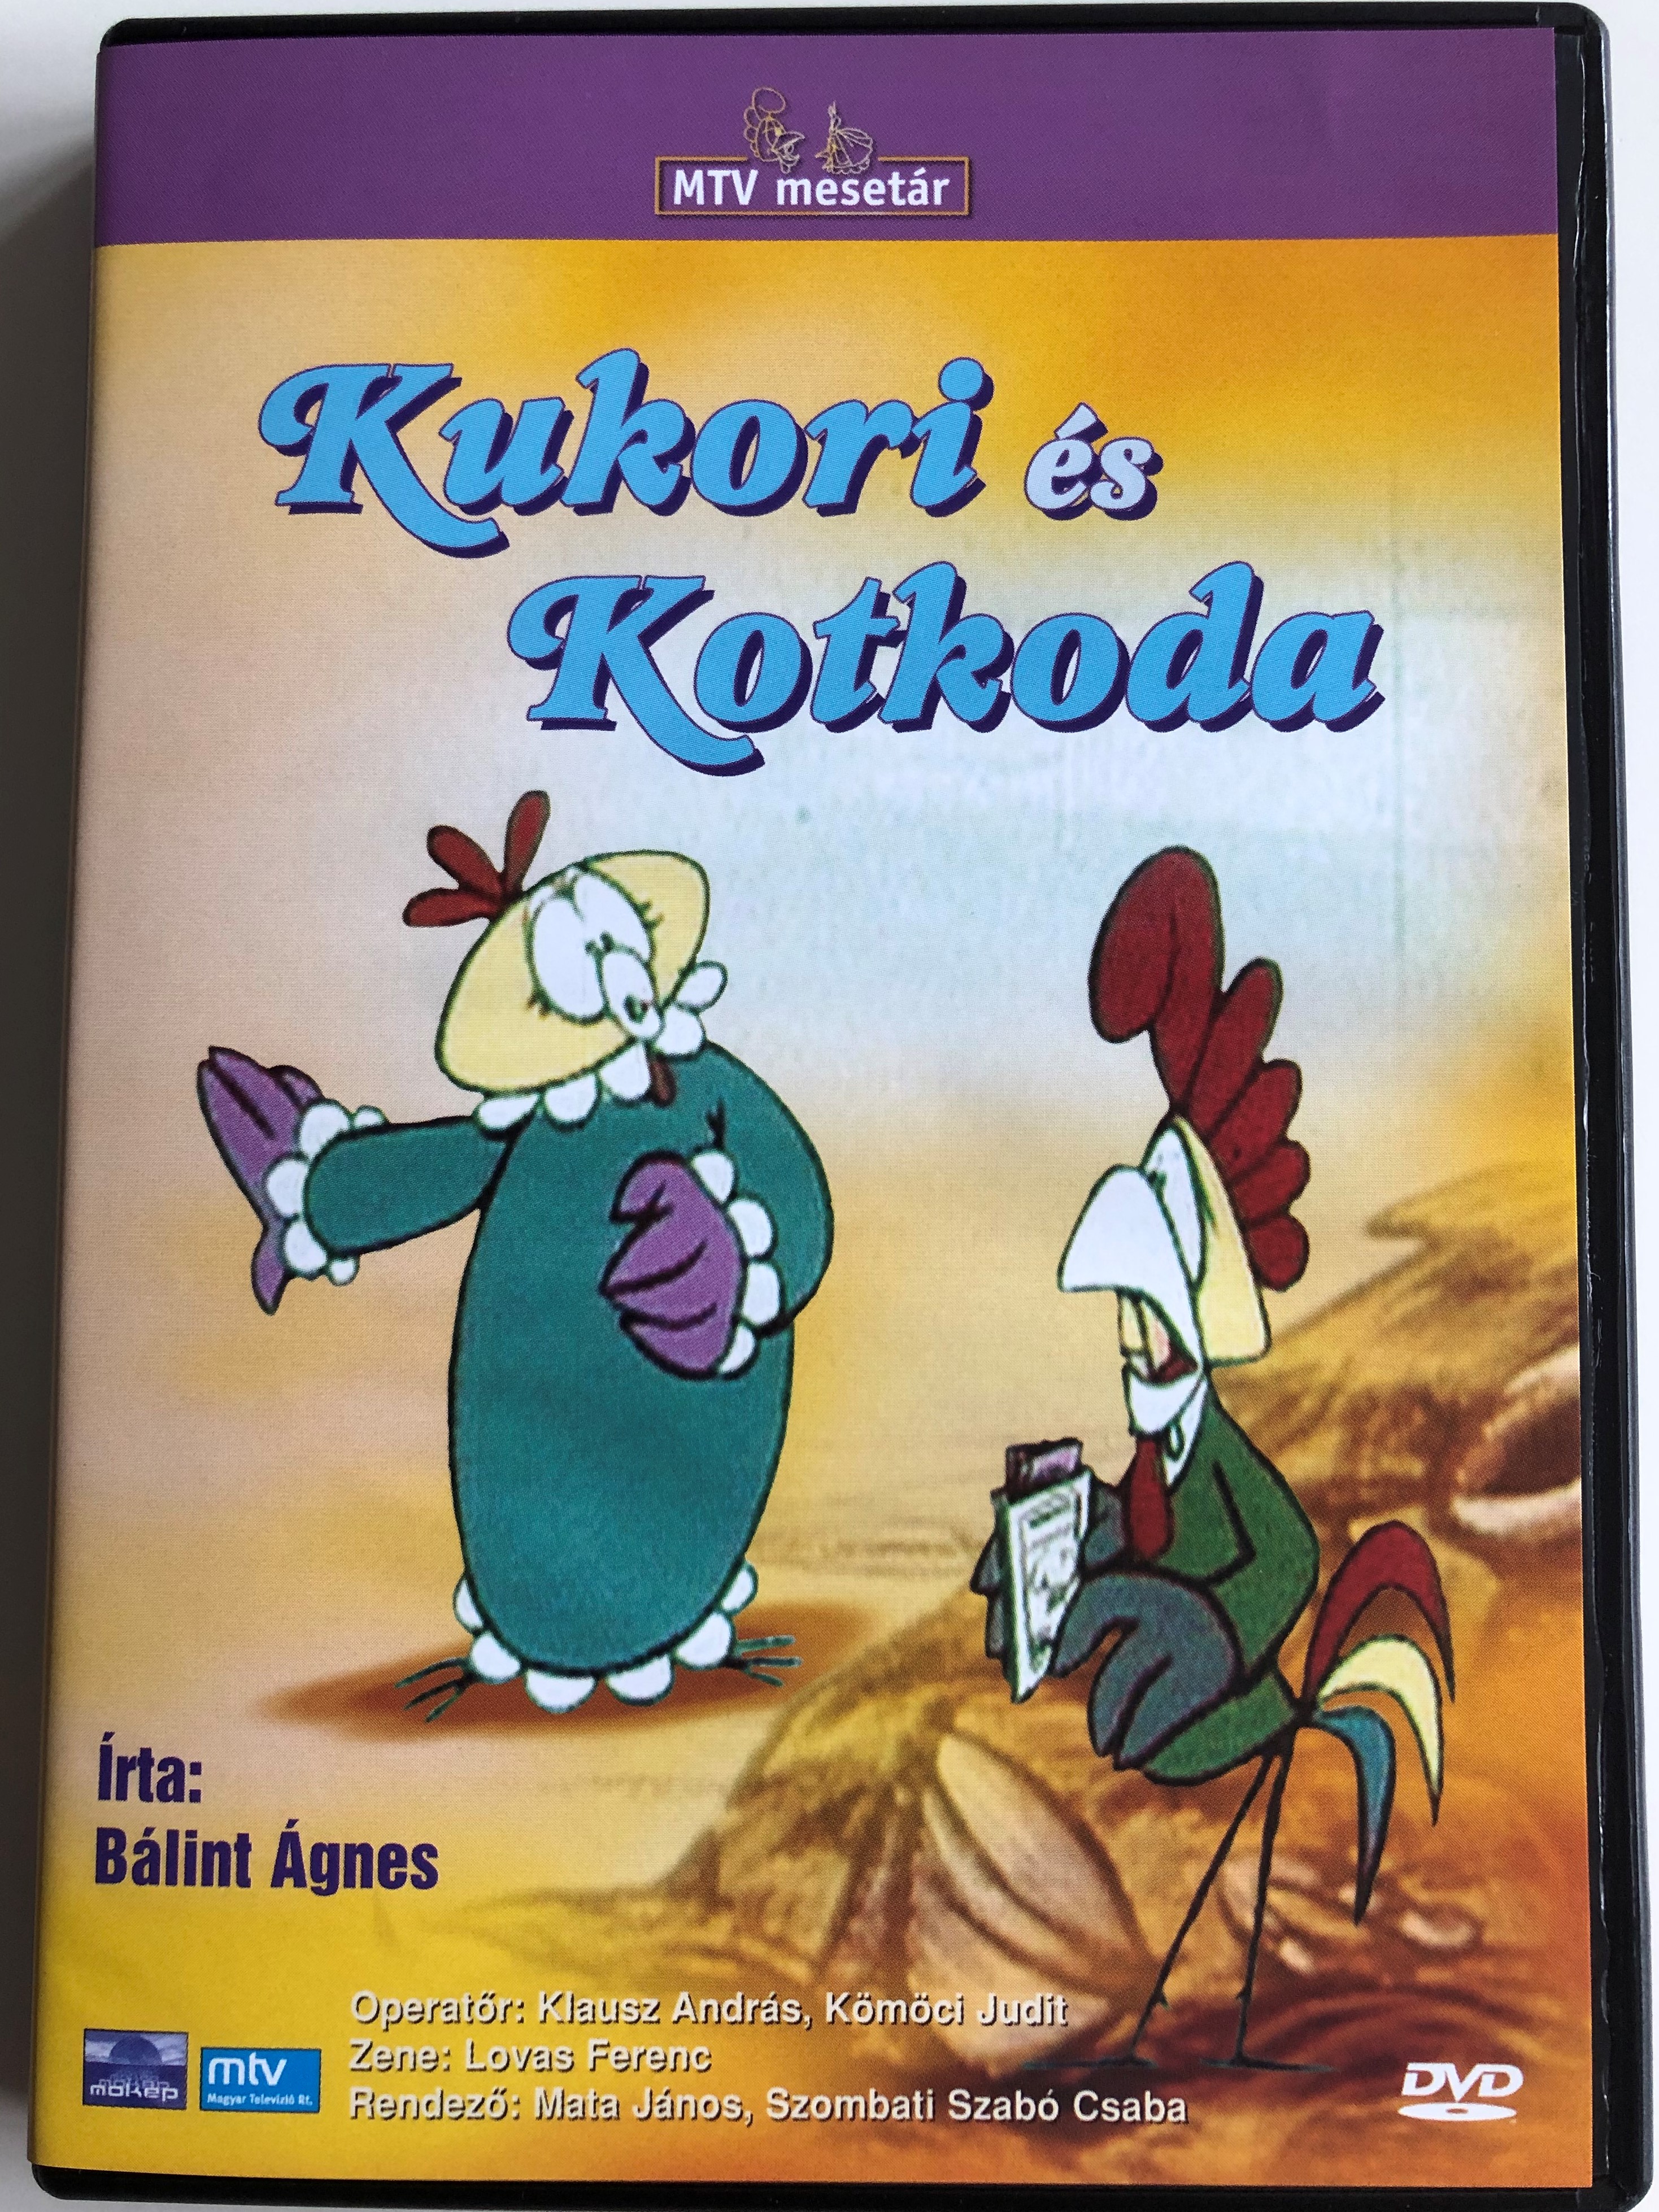 kukori-s-kotkoda-dvd-hungarian-cartoon-8-episodes-1.jpg